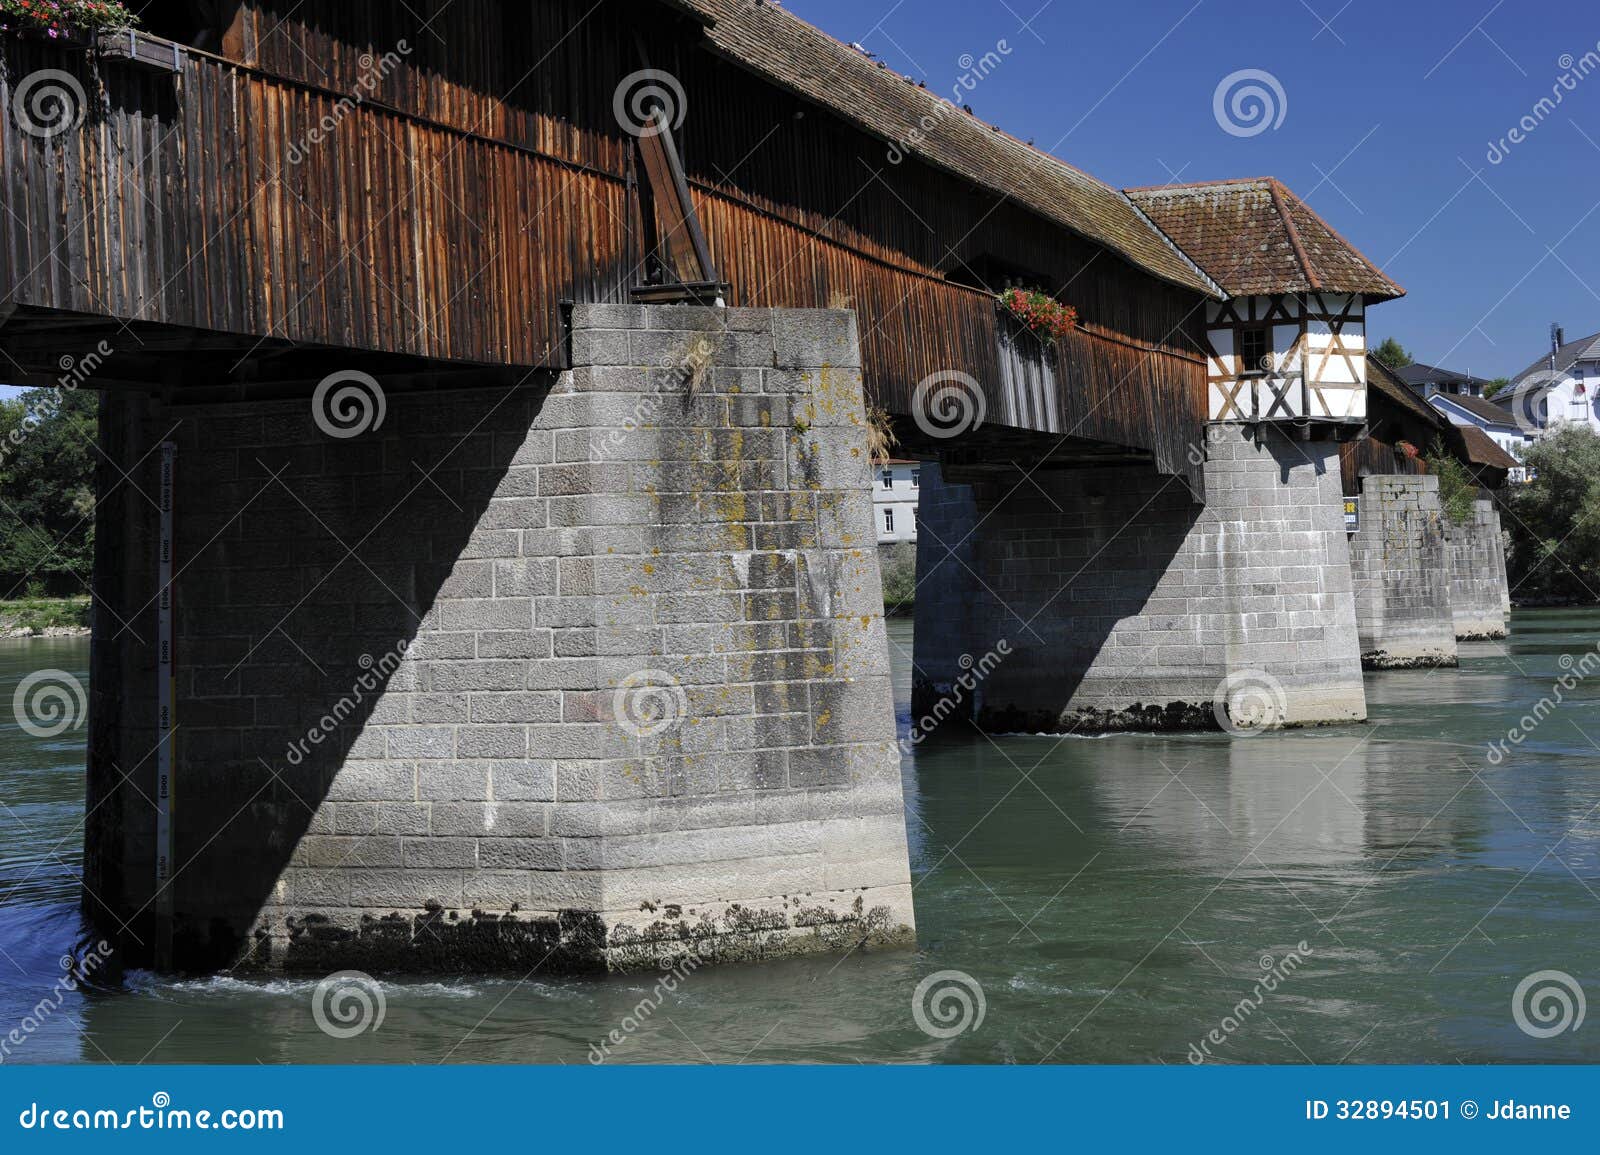 wooden roofed bridge of bad saeckingen, germany